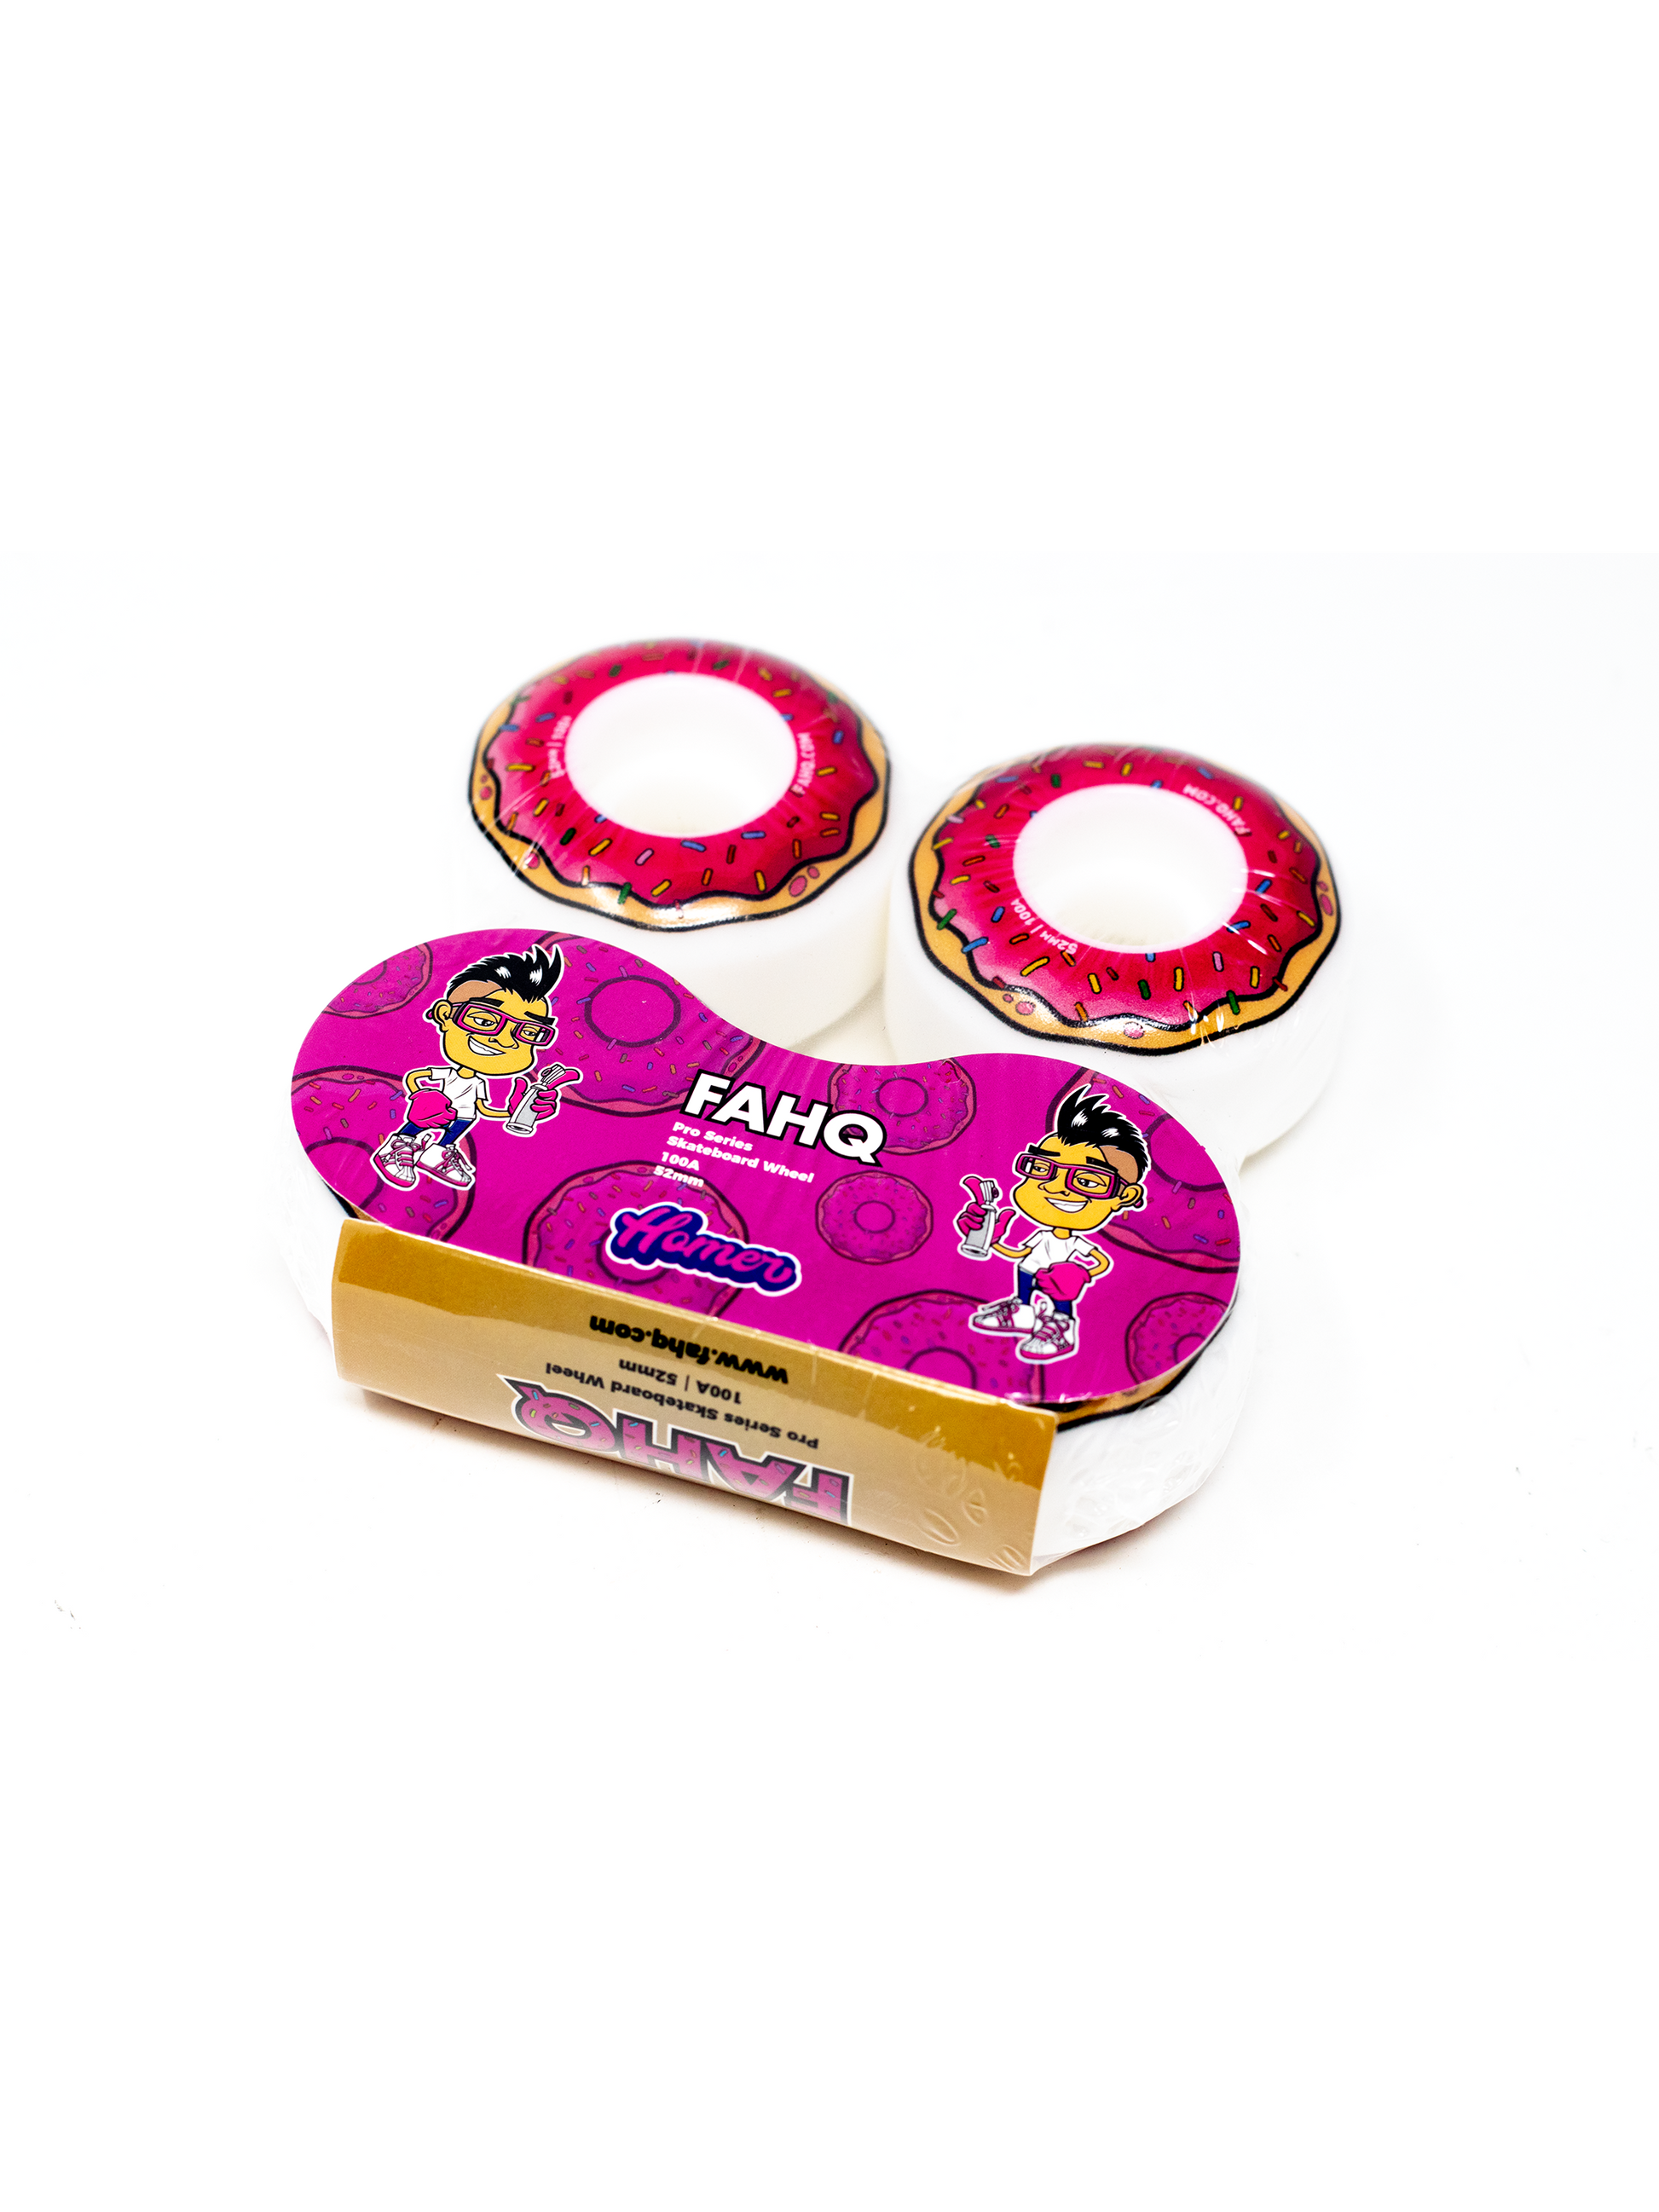 FAHQ Homer Skateboard Wheels Packaging